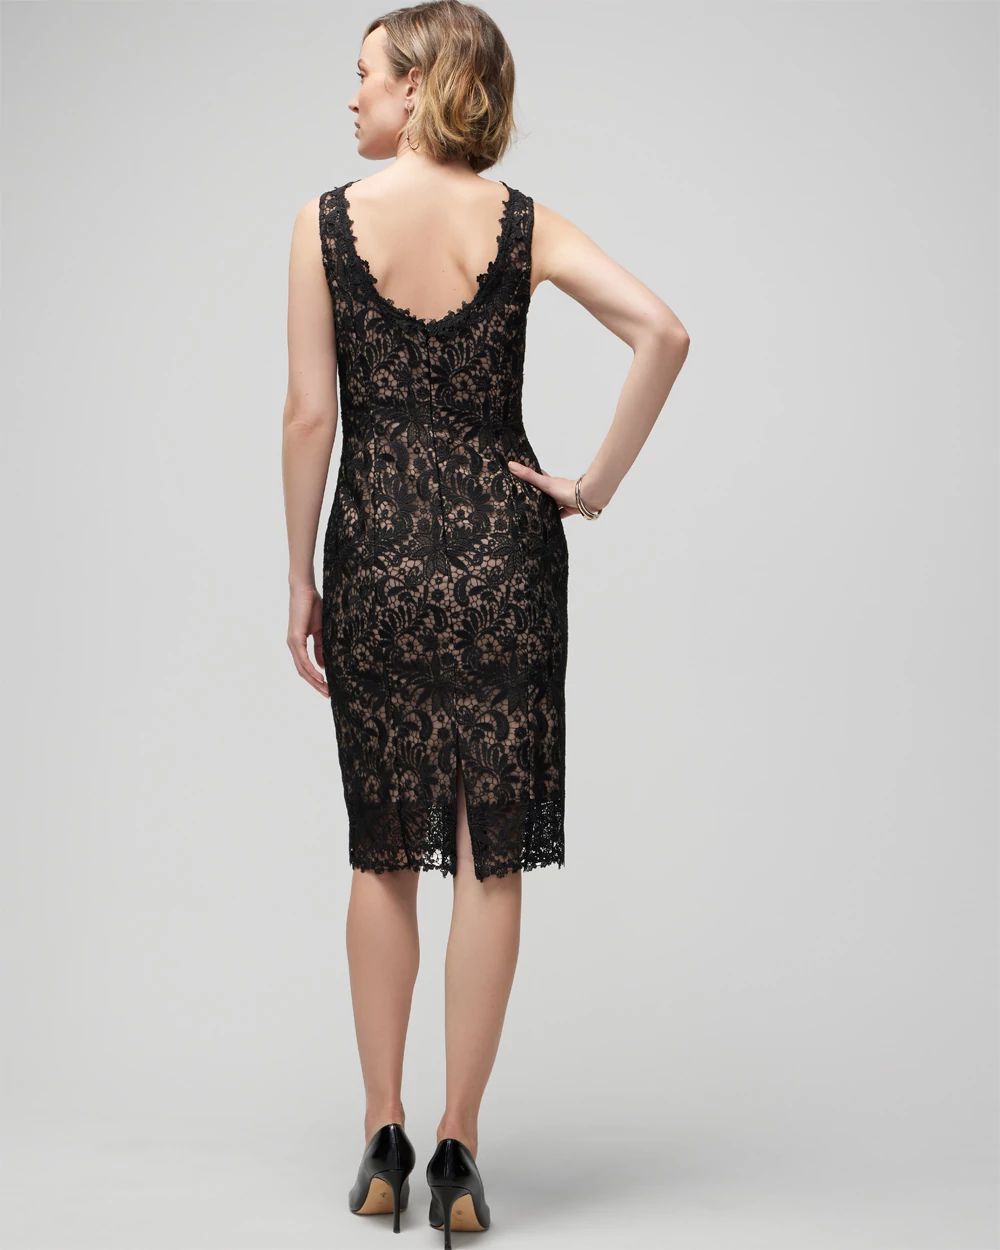 Petite Illusion Neck Lace Sheath Dress click to view larger image.